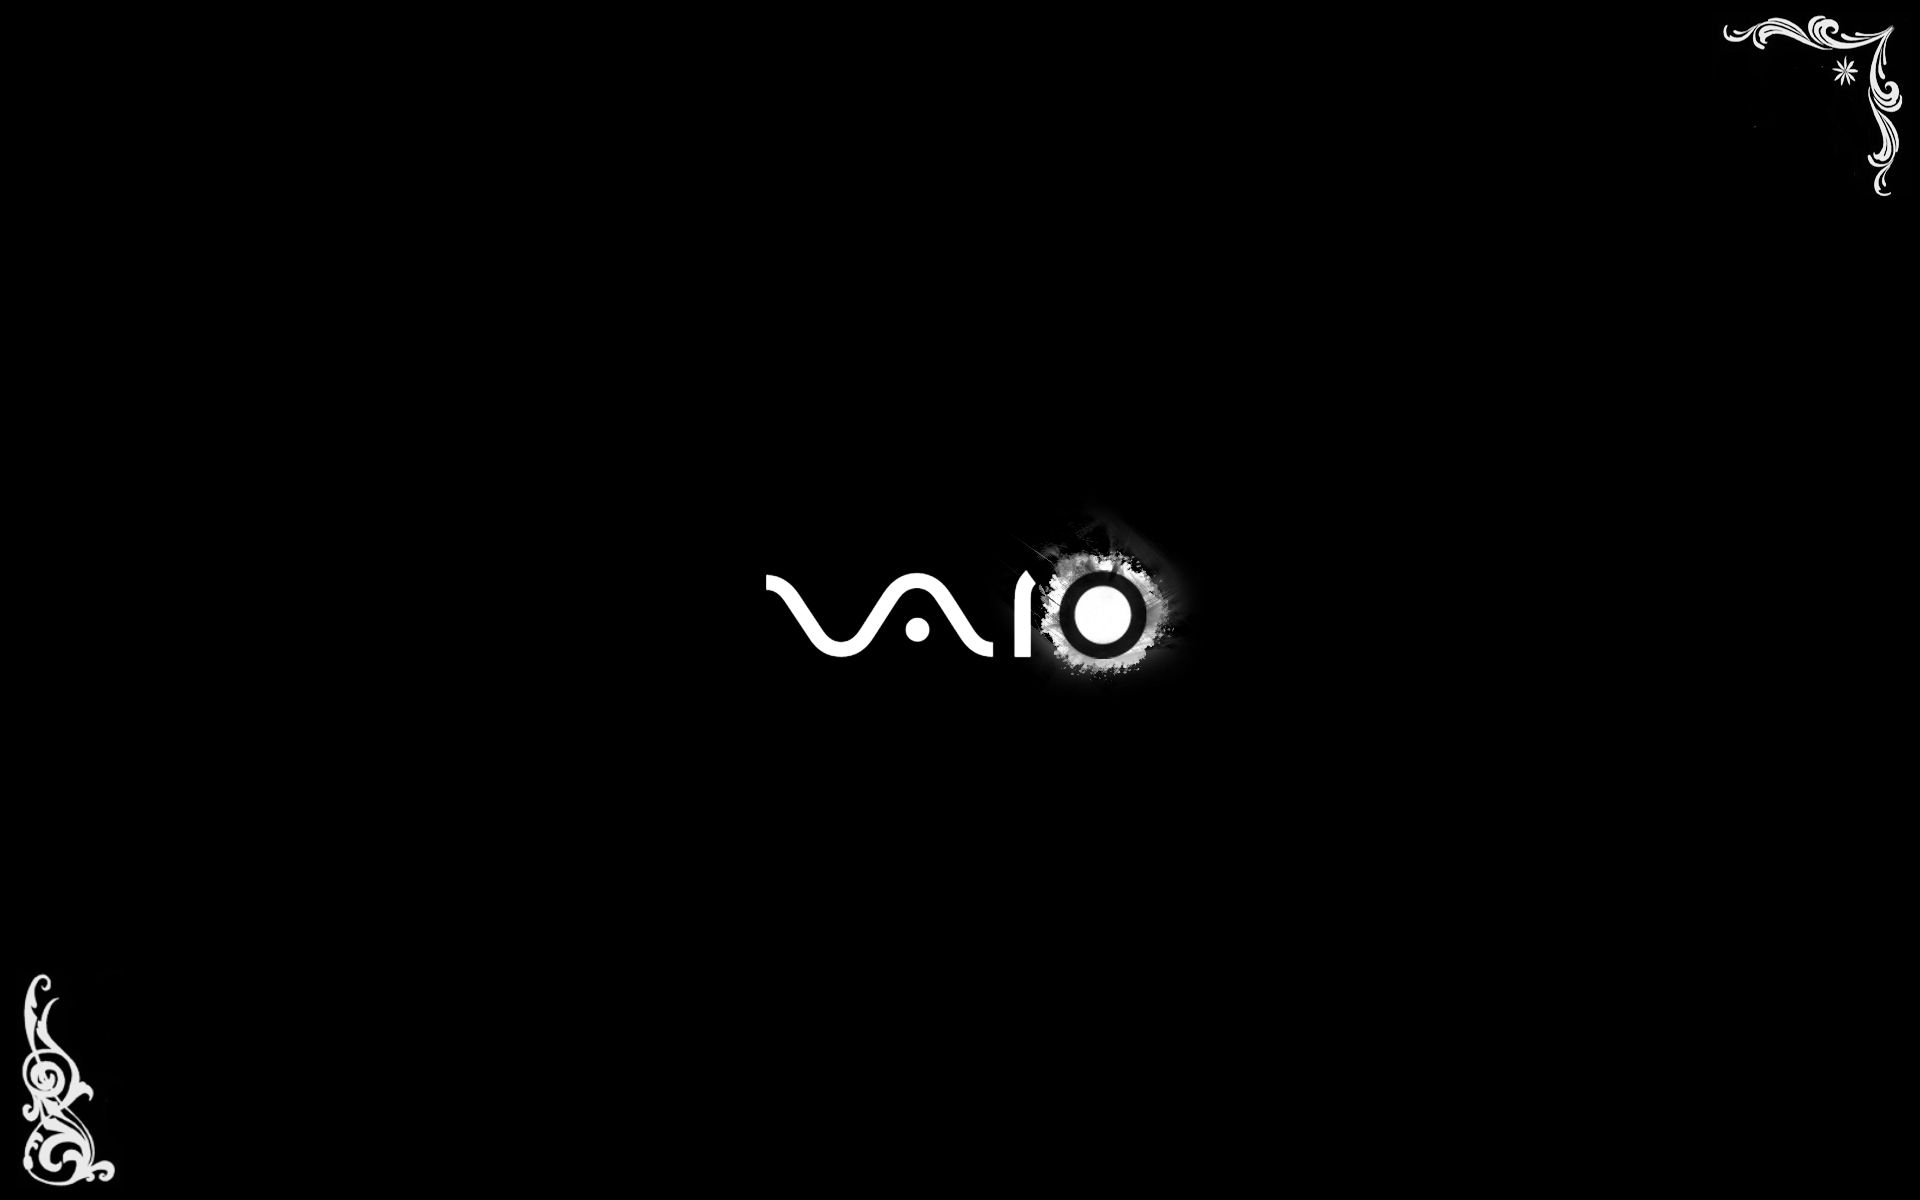 Sony Vaio Wallpaper HD W5 | WallisMe